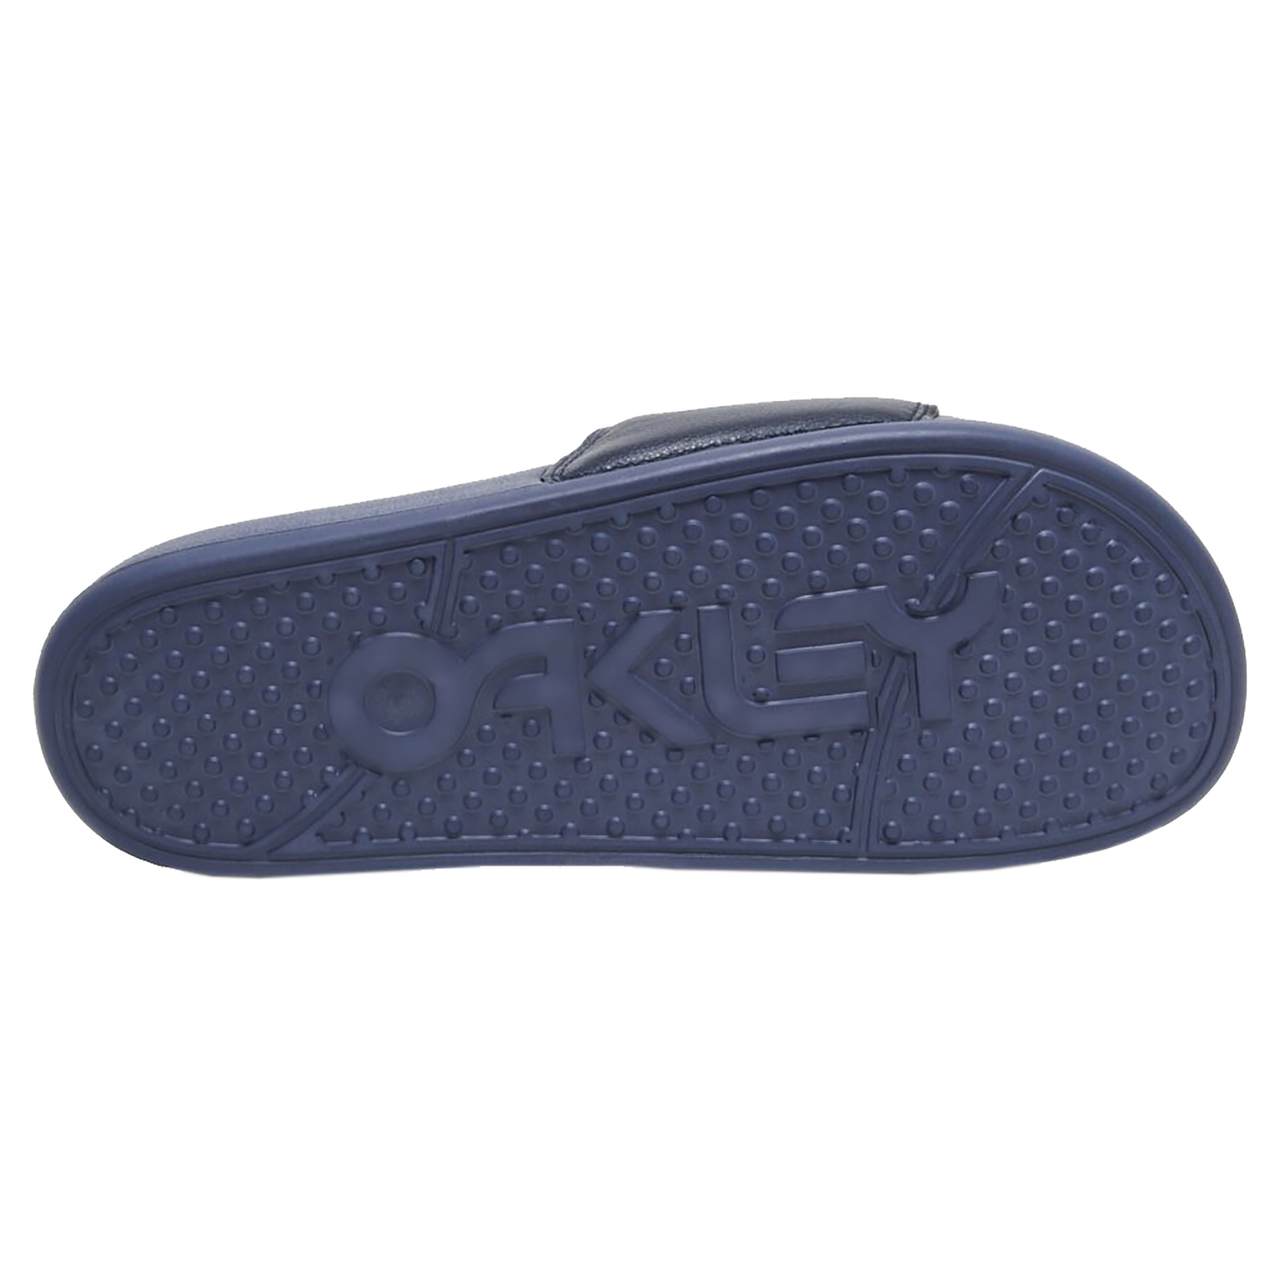 Oakley  B1B Sliders 2.0 Fathom Blue